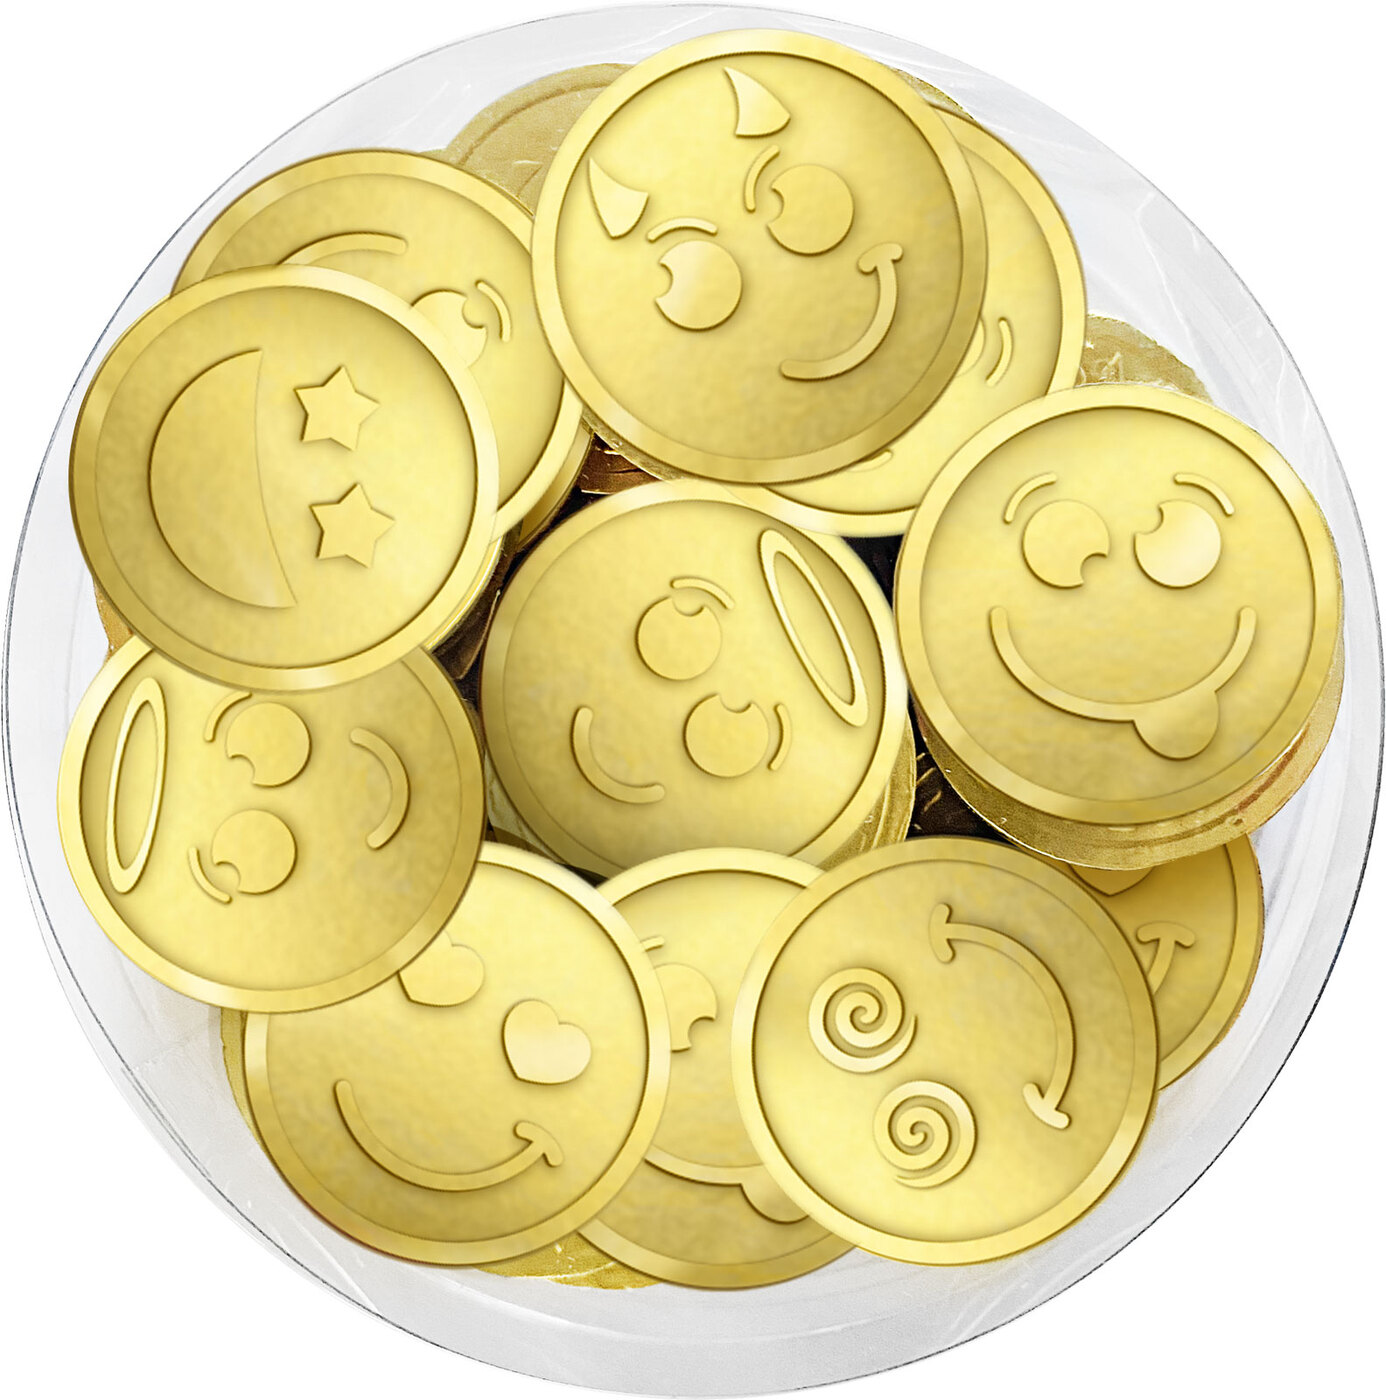 Шоколадка монета. Шоколадные монетки. Шоколадные монеты смайлик. Монетки шоколадные смайлики. Монета Emoji.